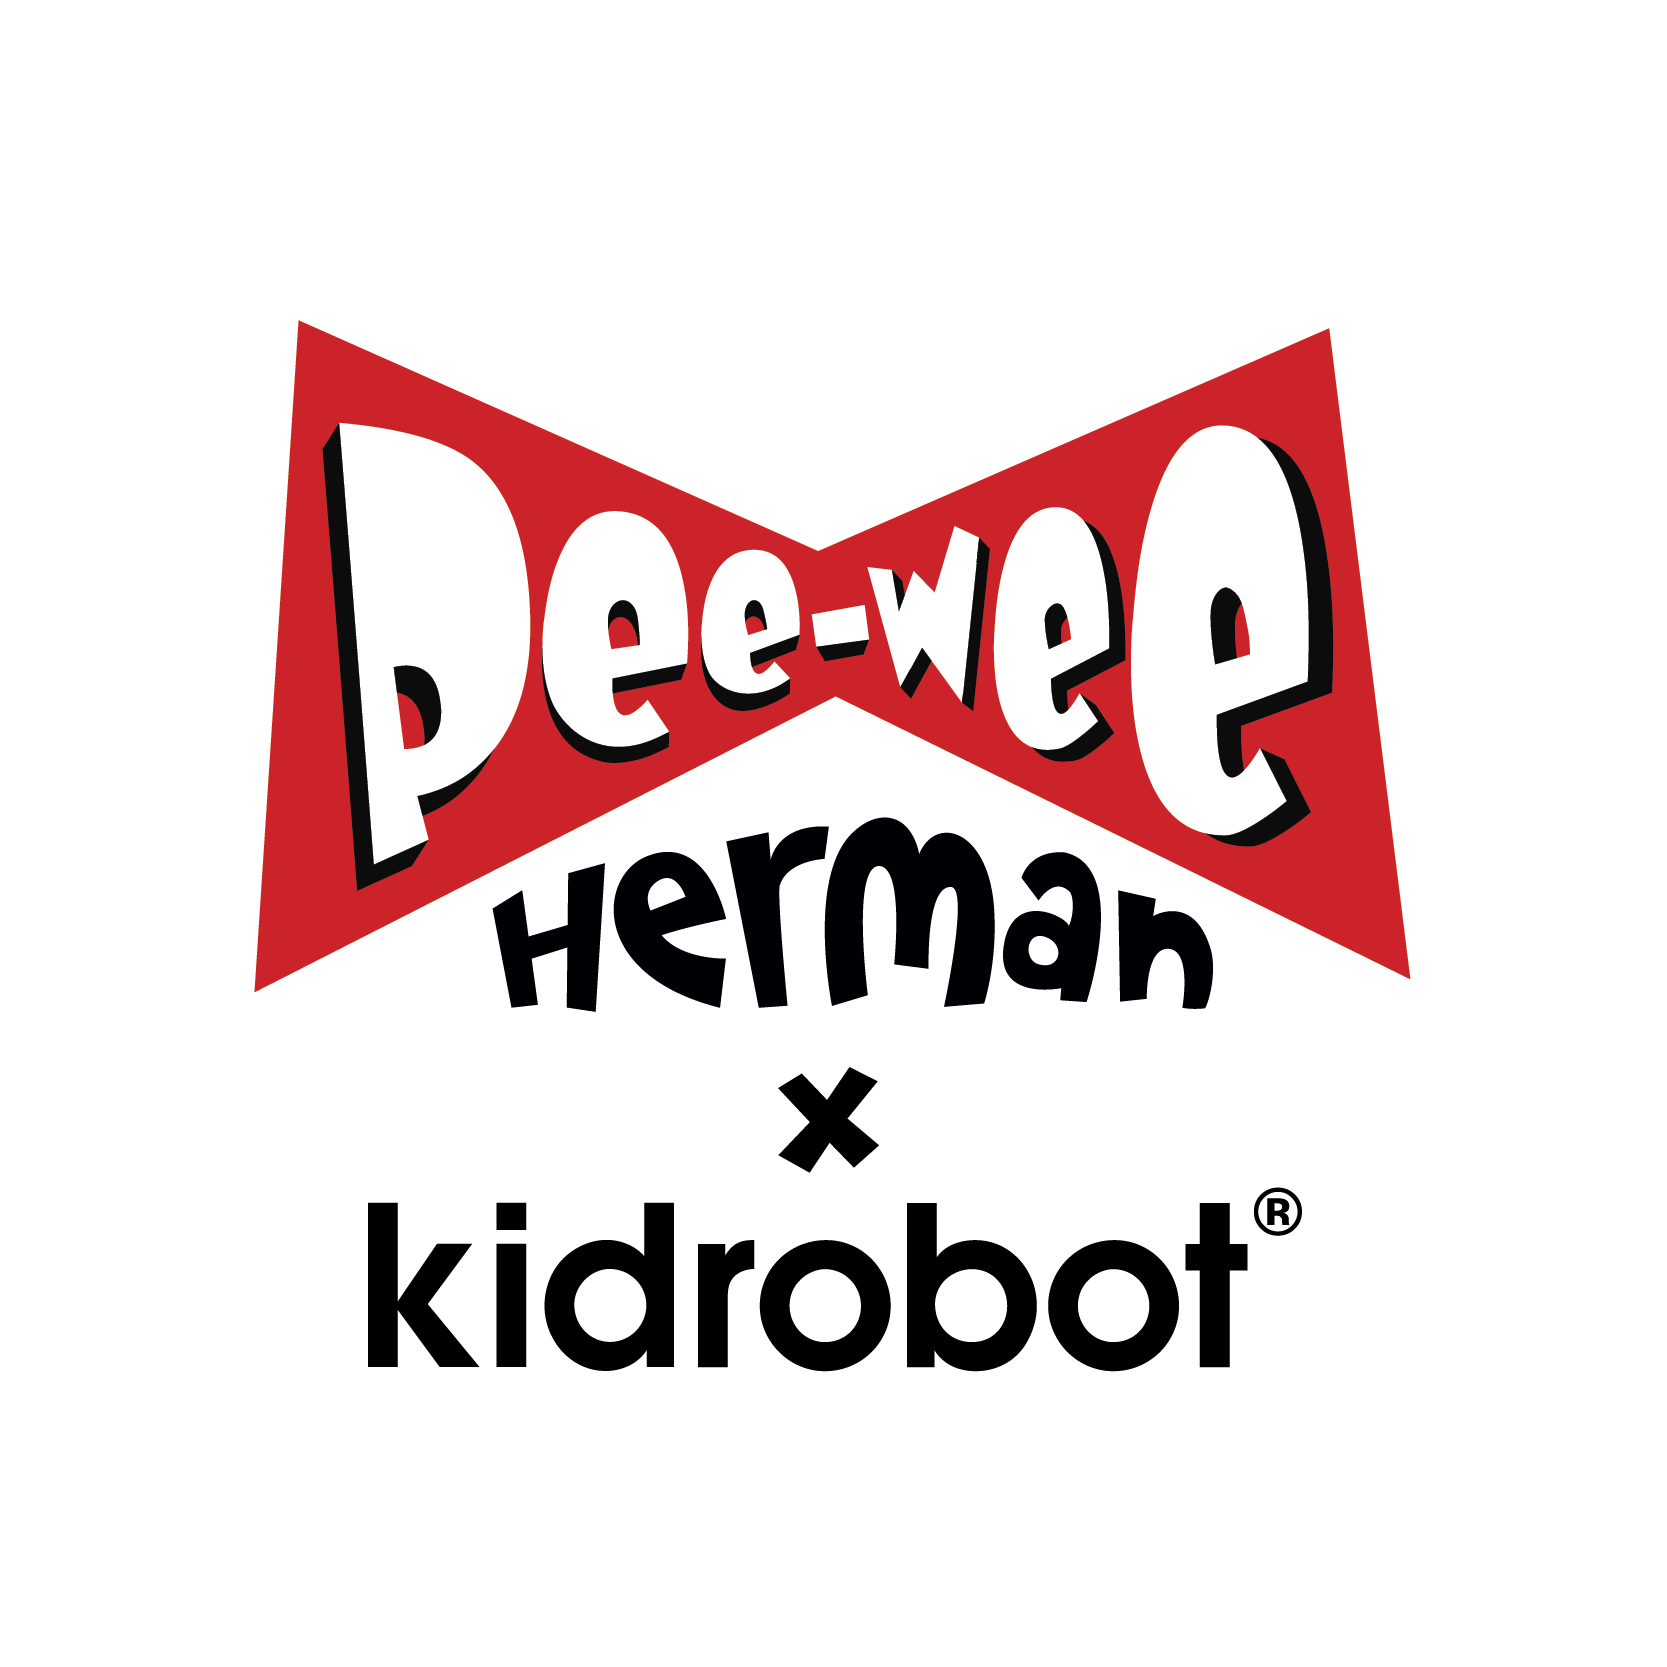 Pee-wee Herman x Kidrobot